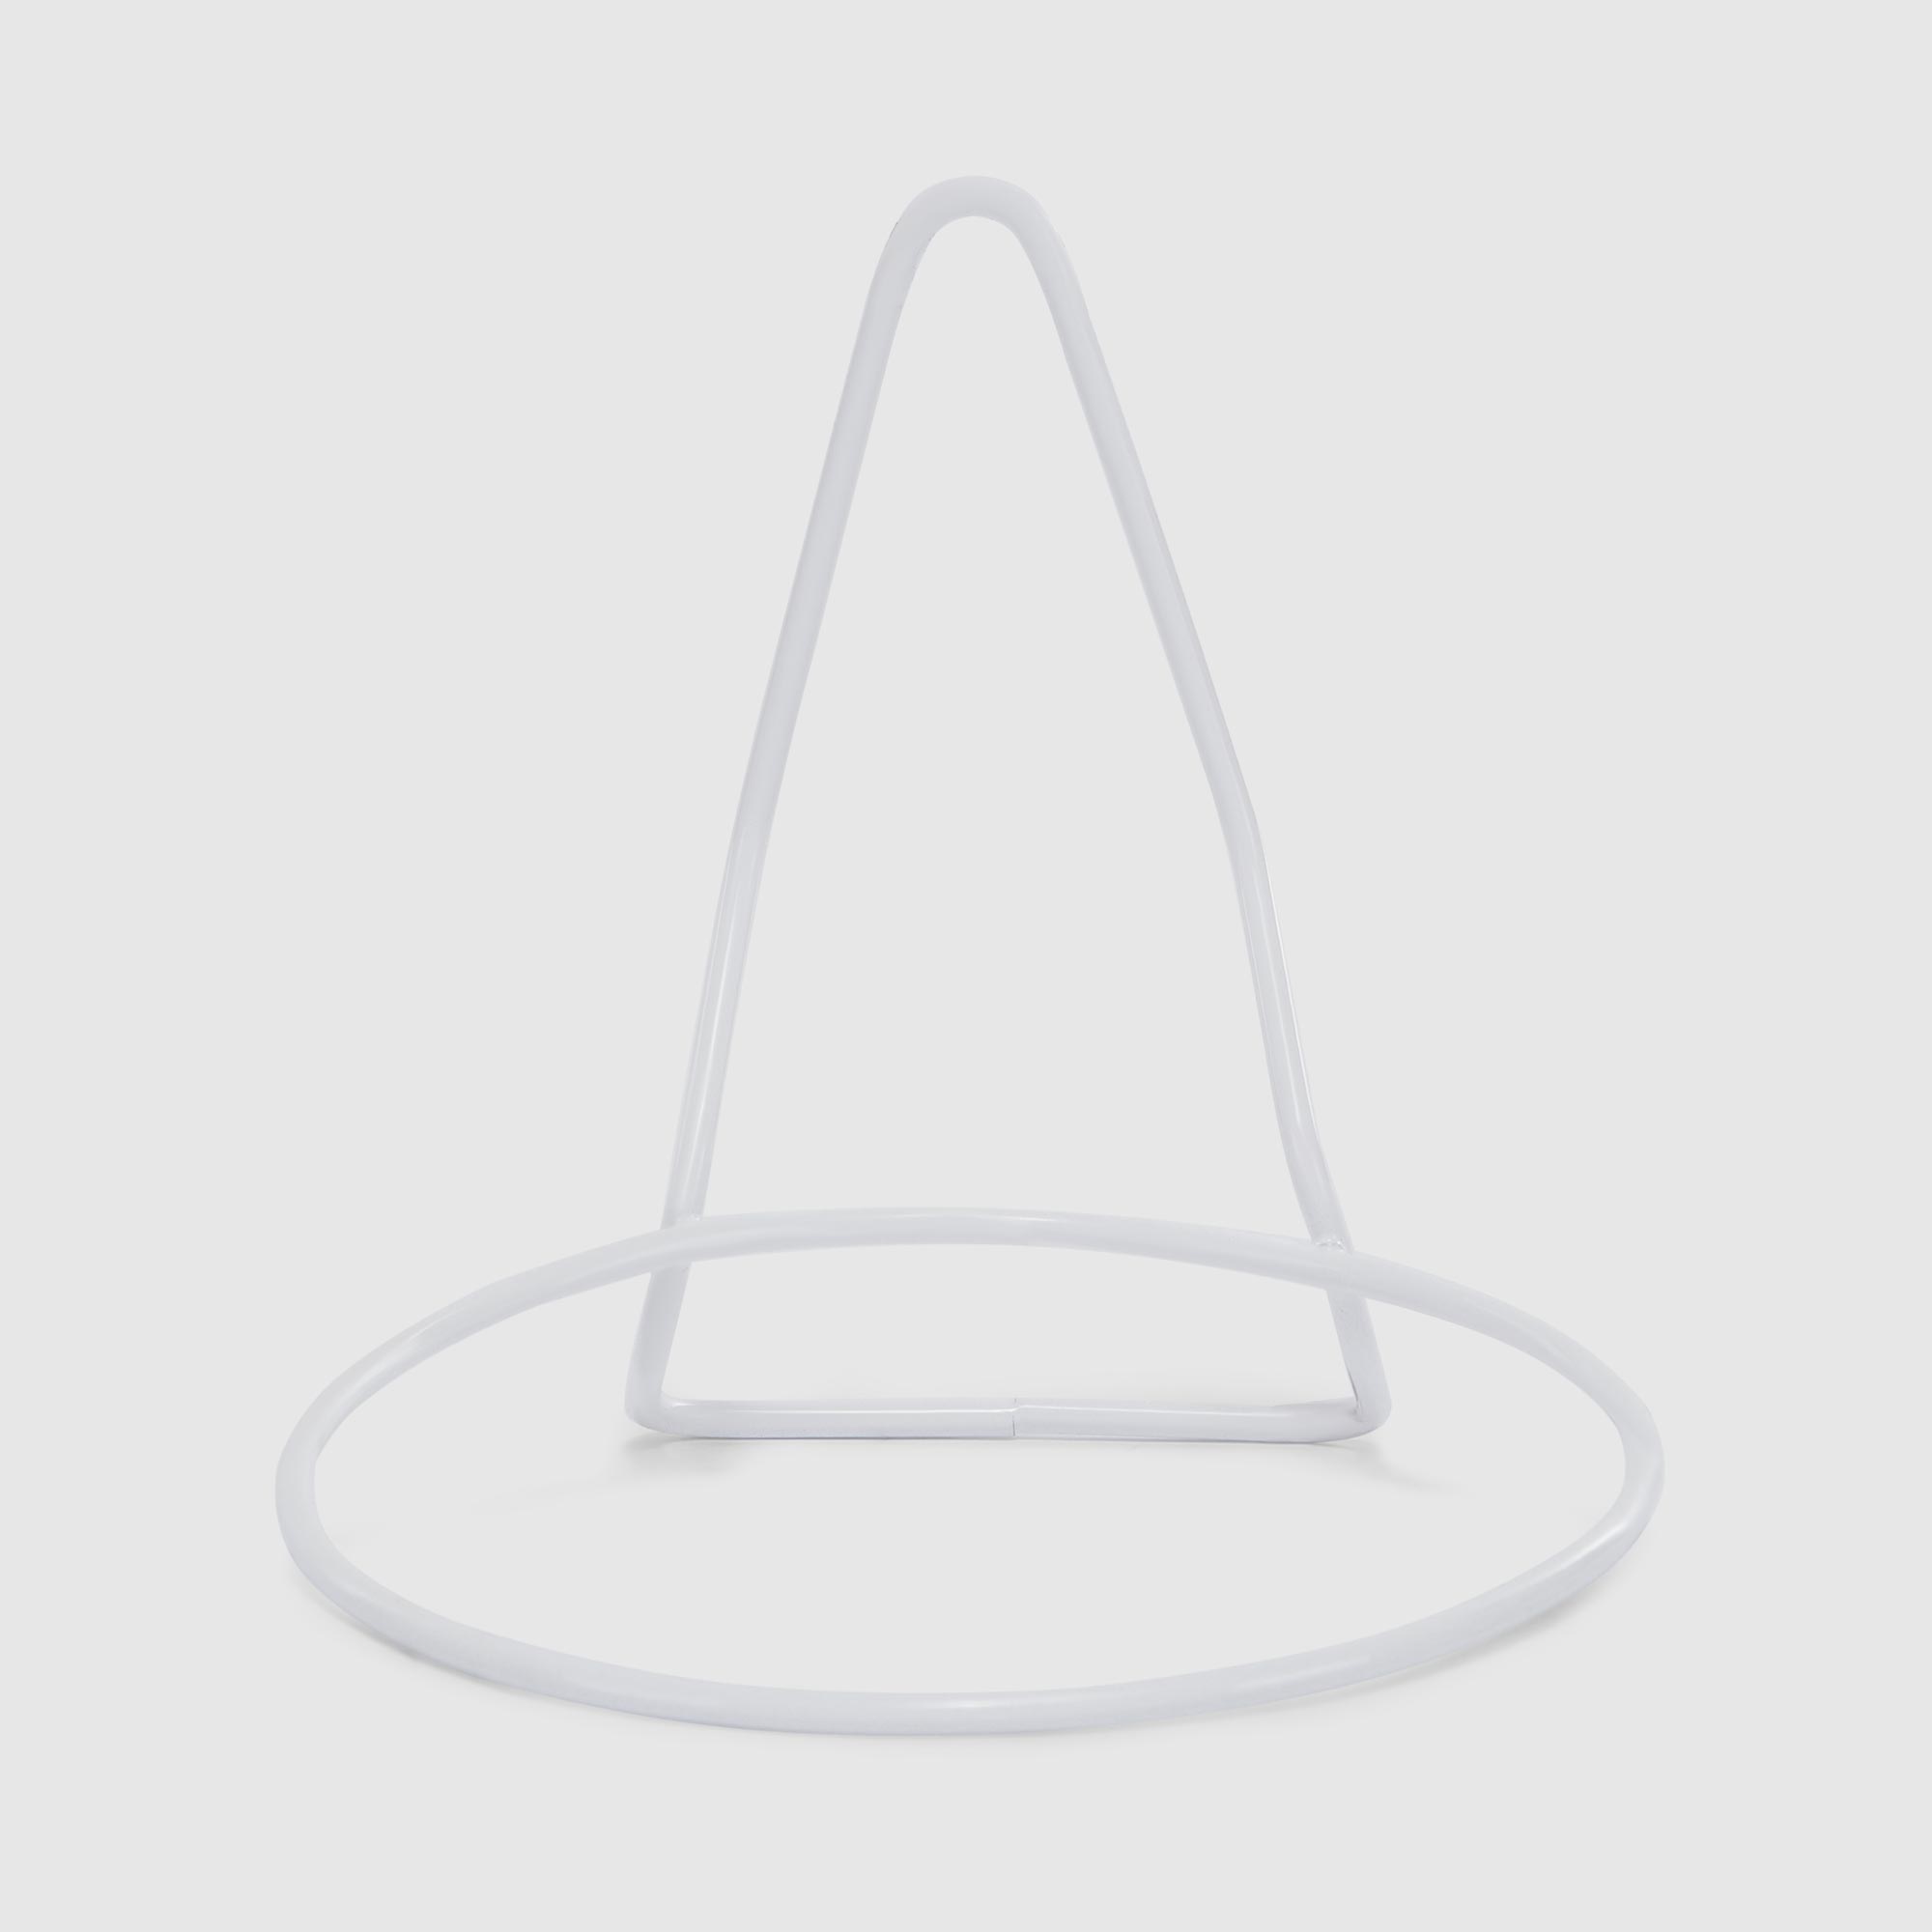 фото Настенный кронштейн для кашпо artevasi белый 15 см (5600442829747)